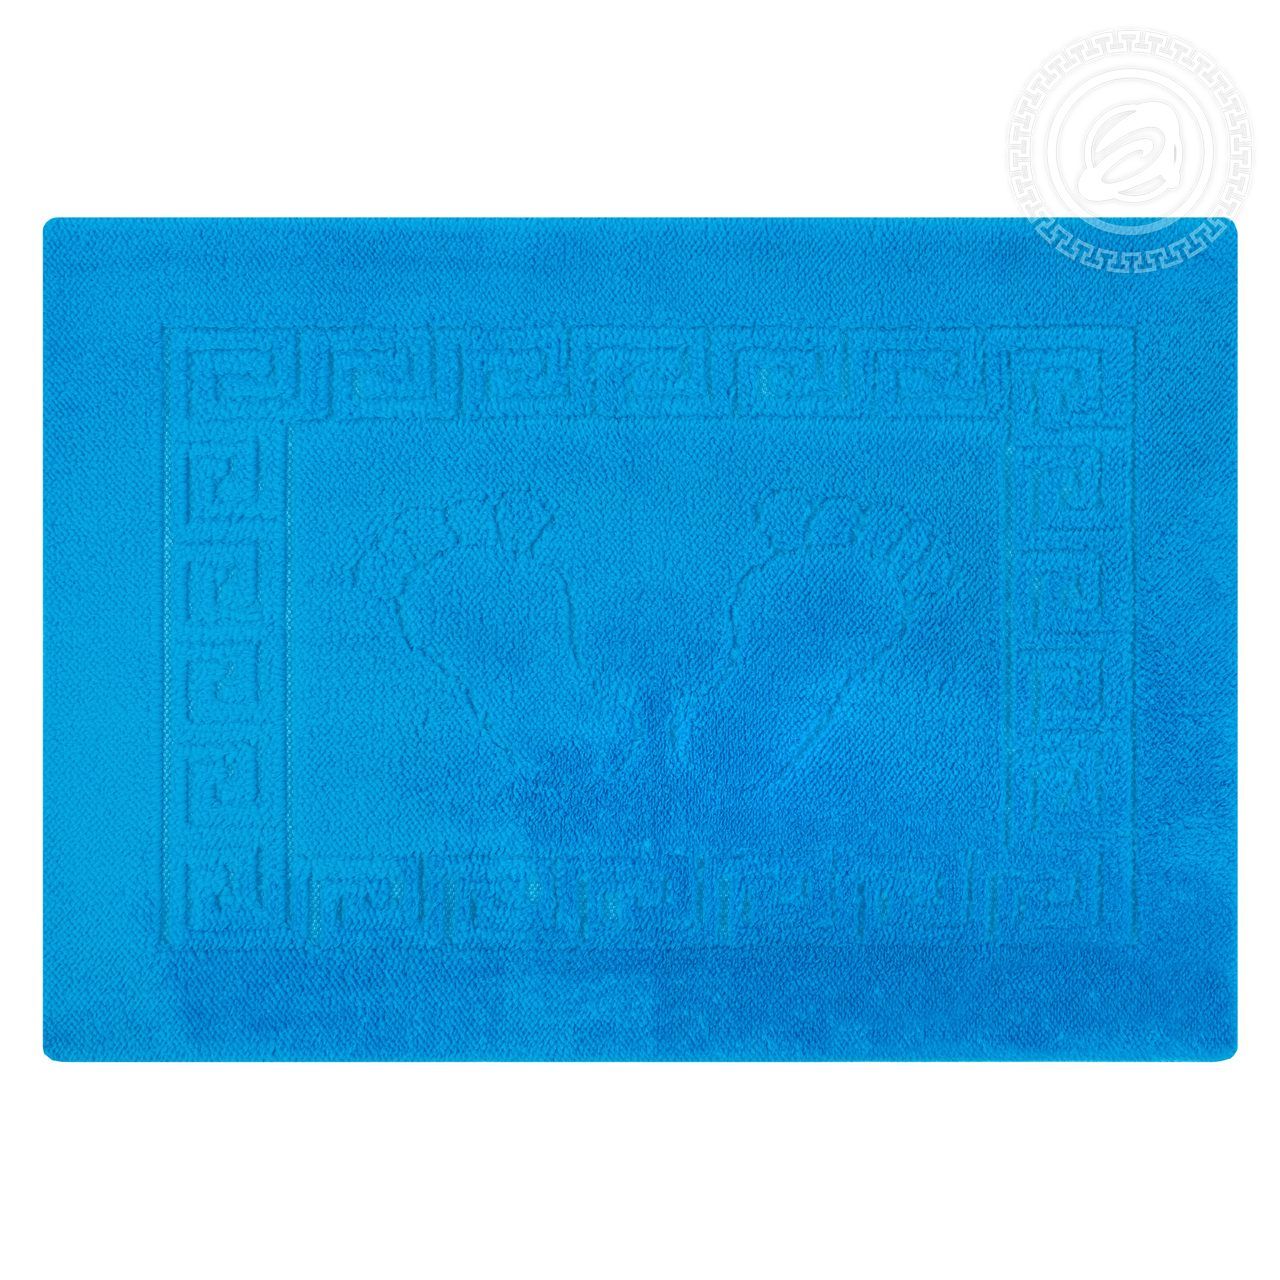 Коврик на резиновой основе НОЖКИ (голубой) Ножки АртД резин.45*65